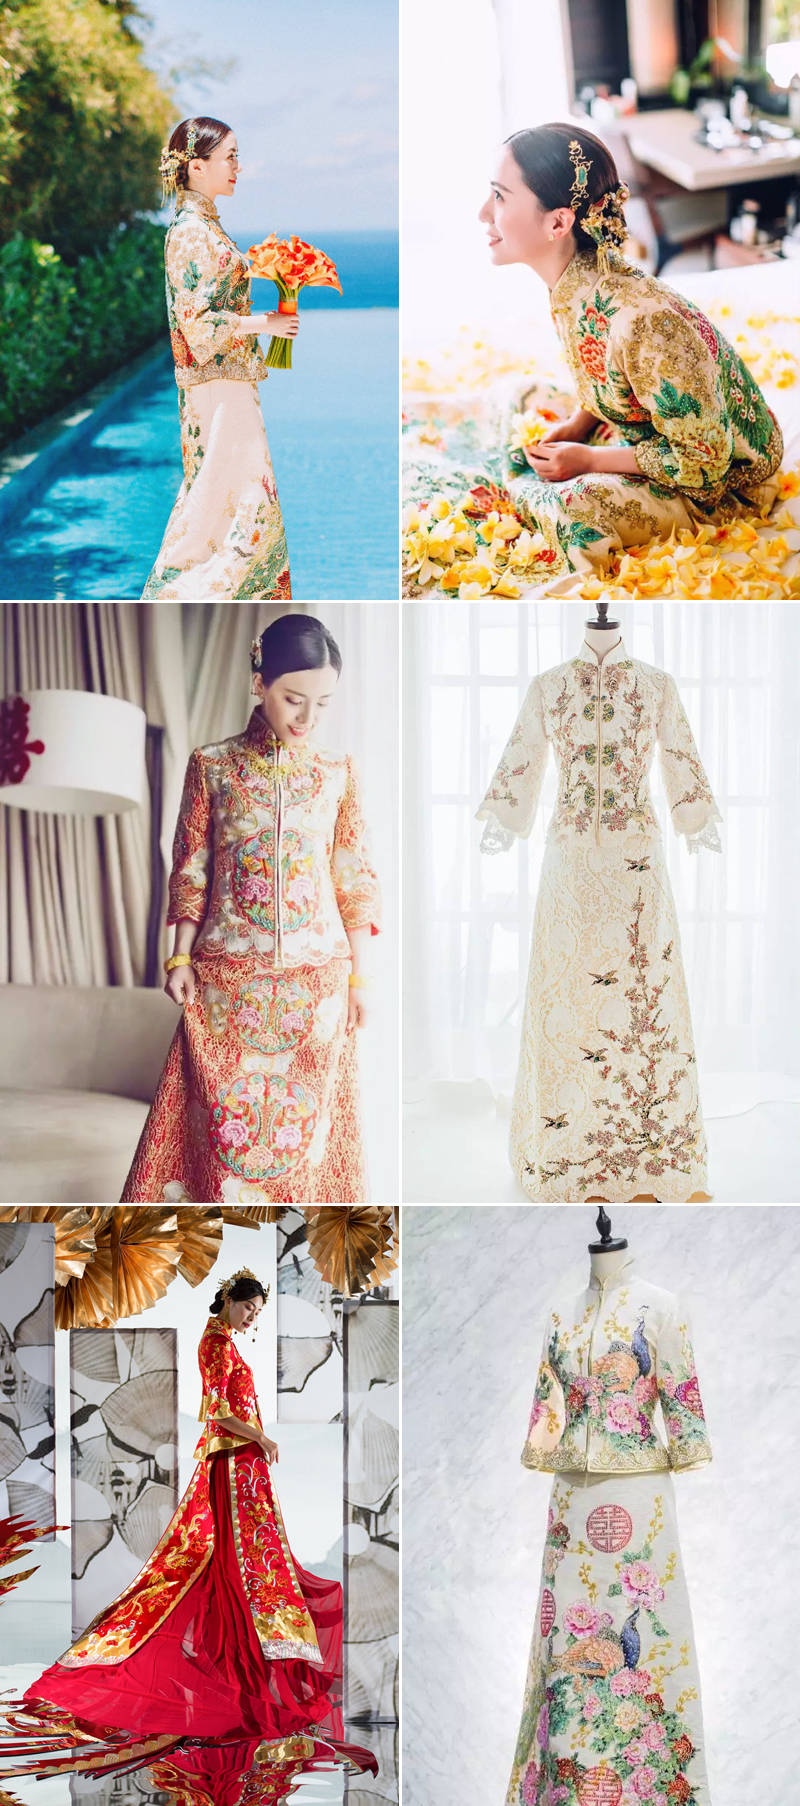 traditional chinese wedding attire